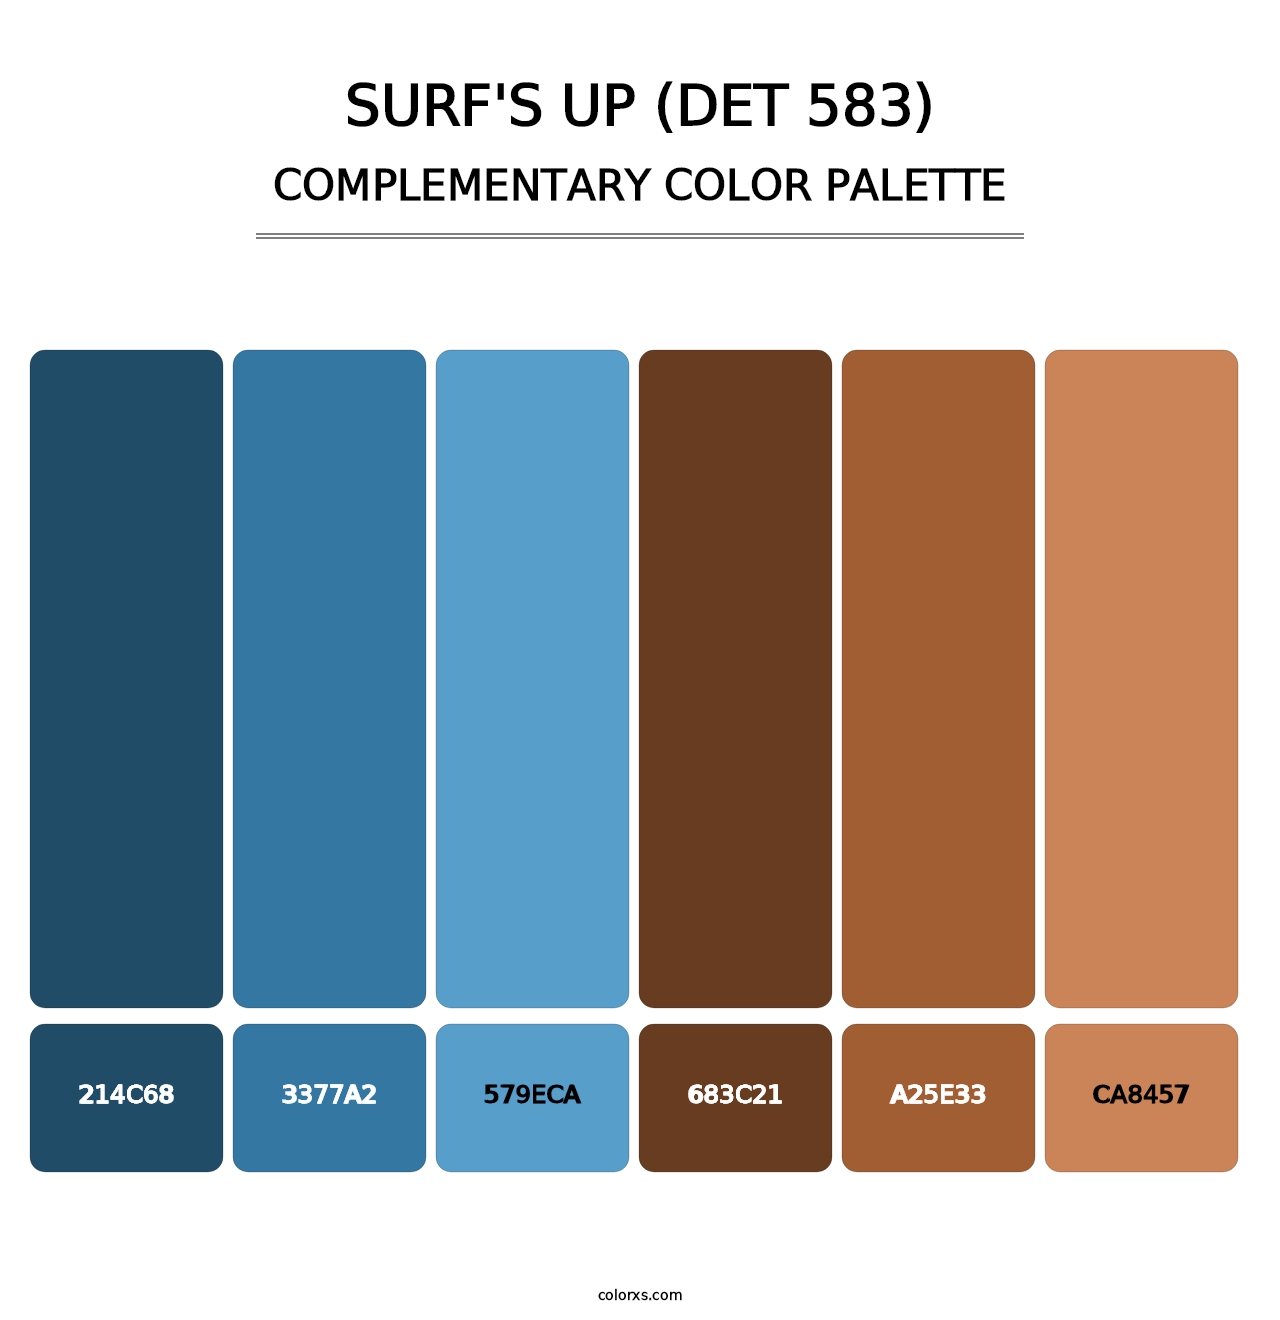 Surf's Up (DET 583) - Complementary Color Palette